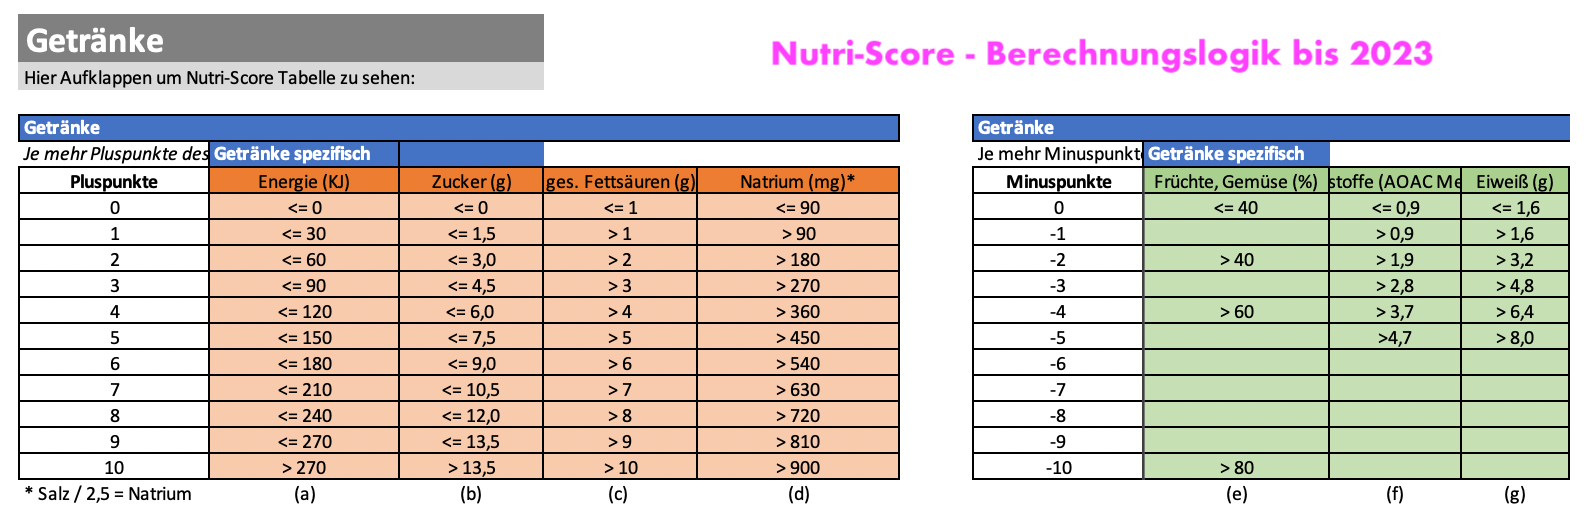 Nutri Score Tabelle für Getränke Kategorie